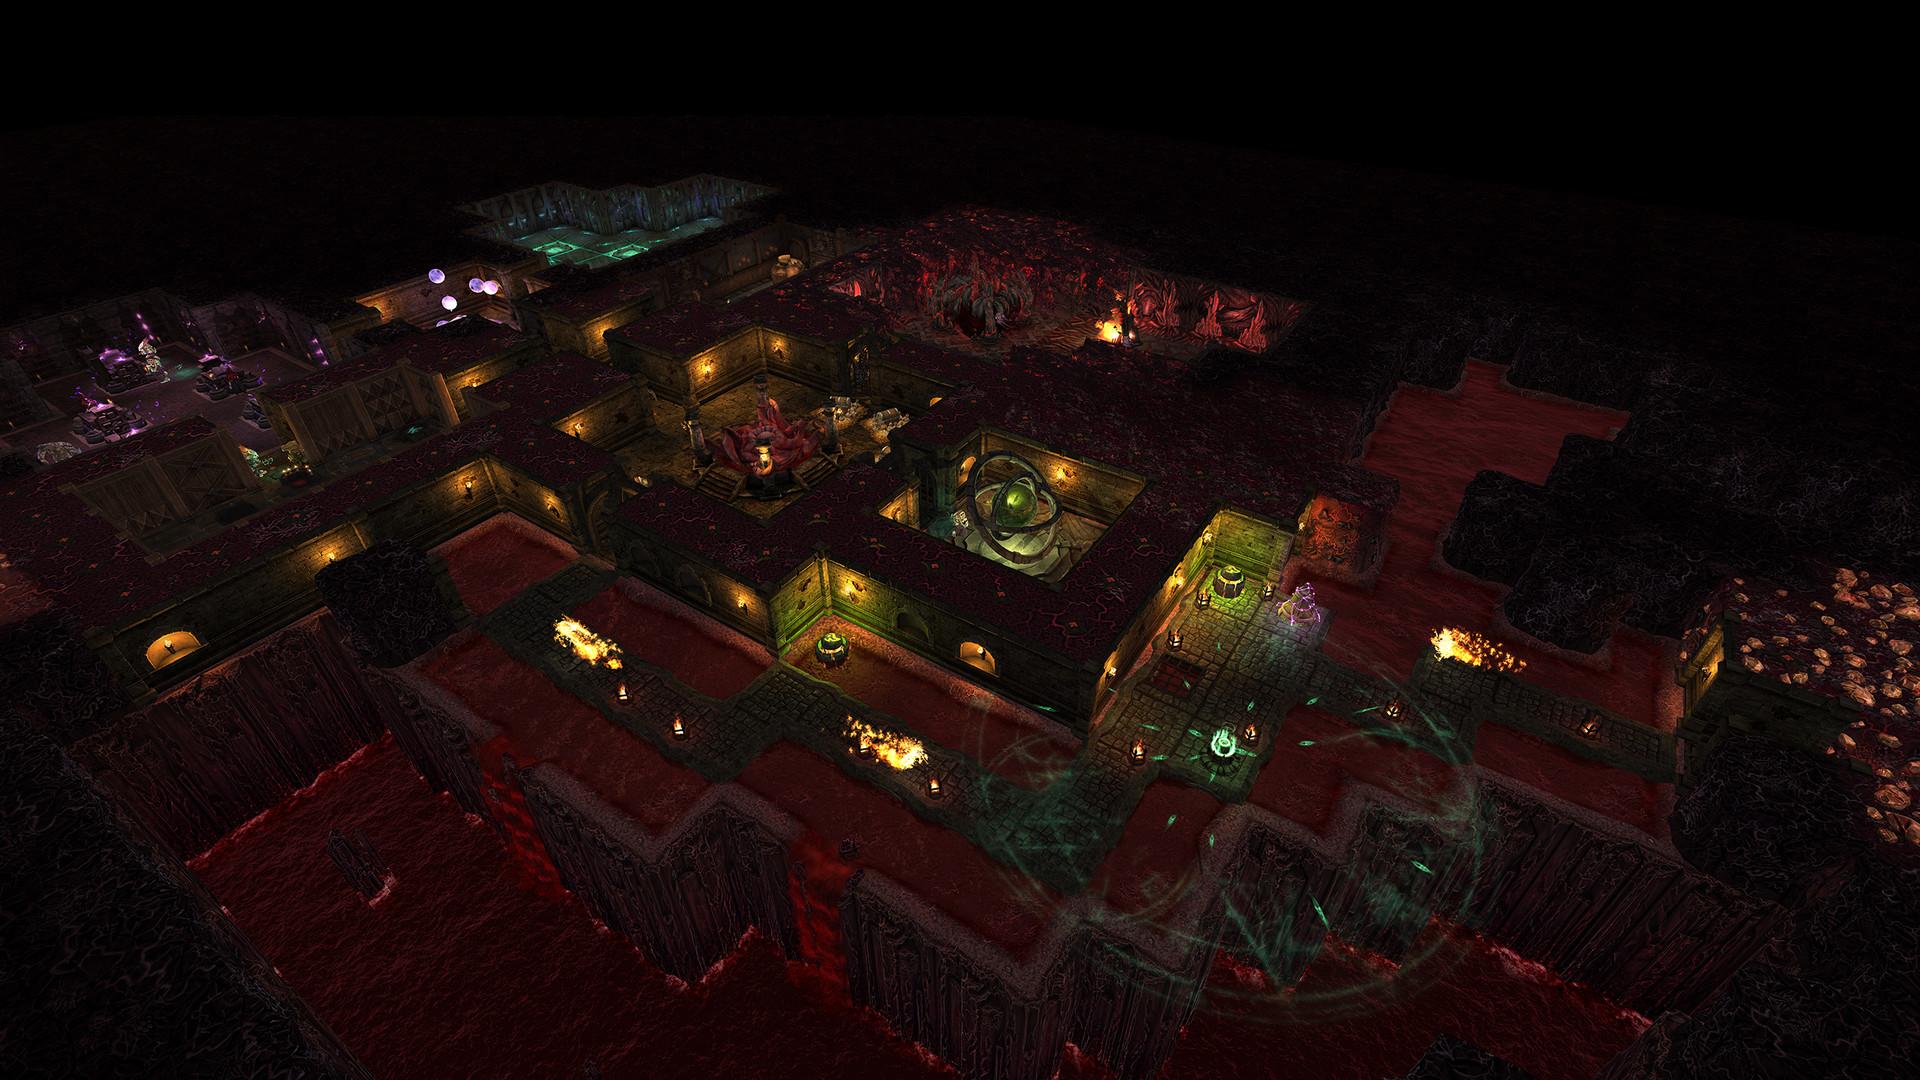 Screenshot №11 from game War for the Overworld